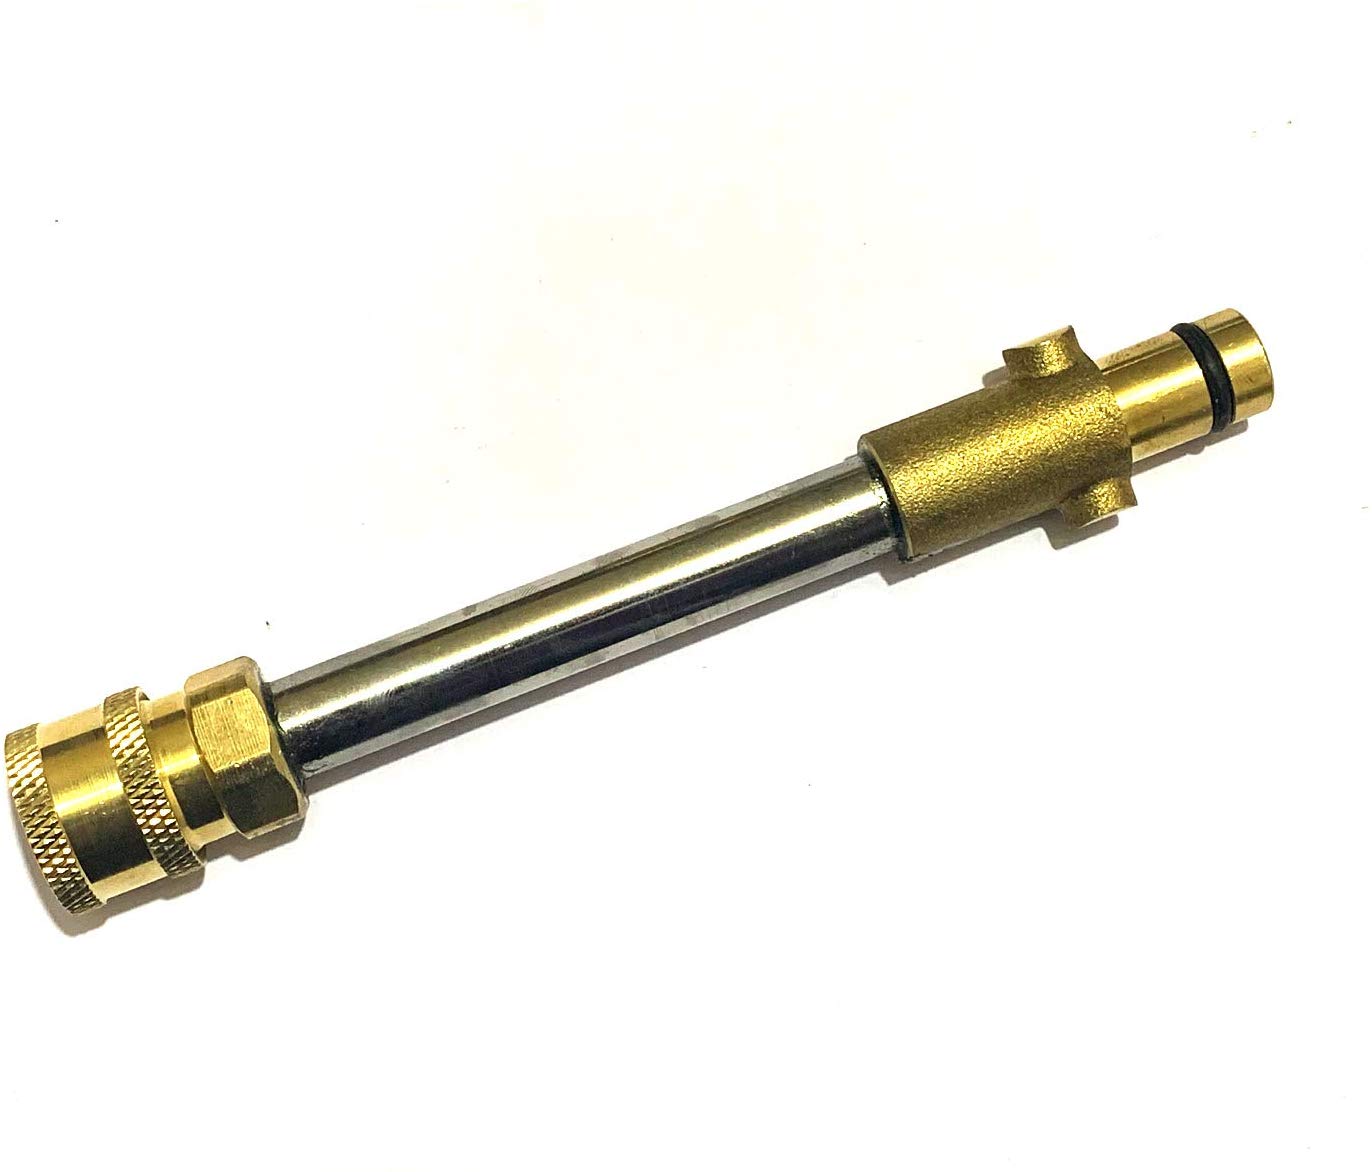 Wavex Brass Pressure Washer Gun Adapter to 1/4" Quick Connect Fitting.